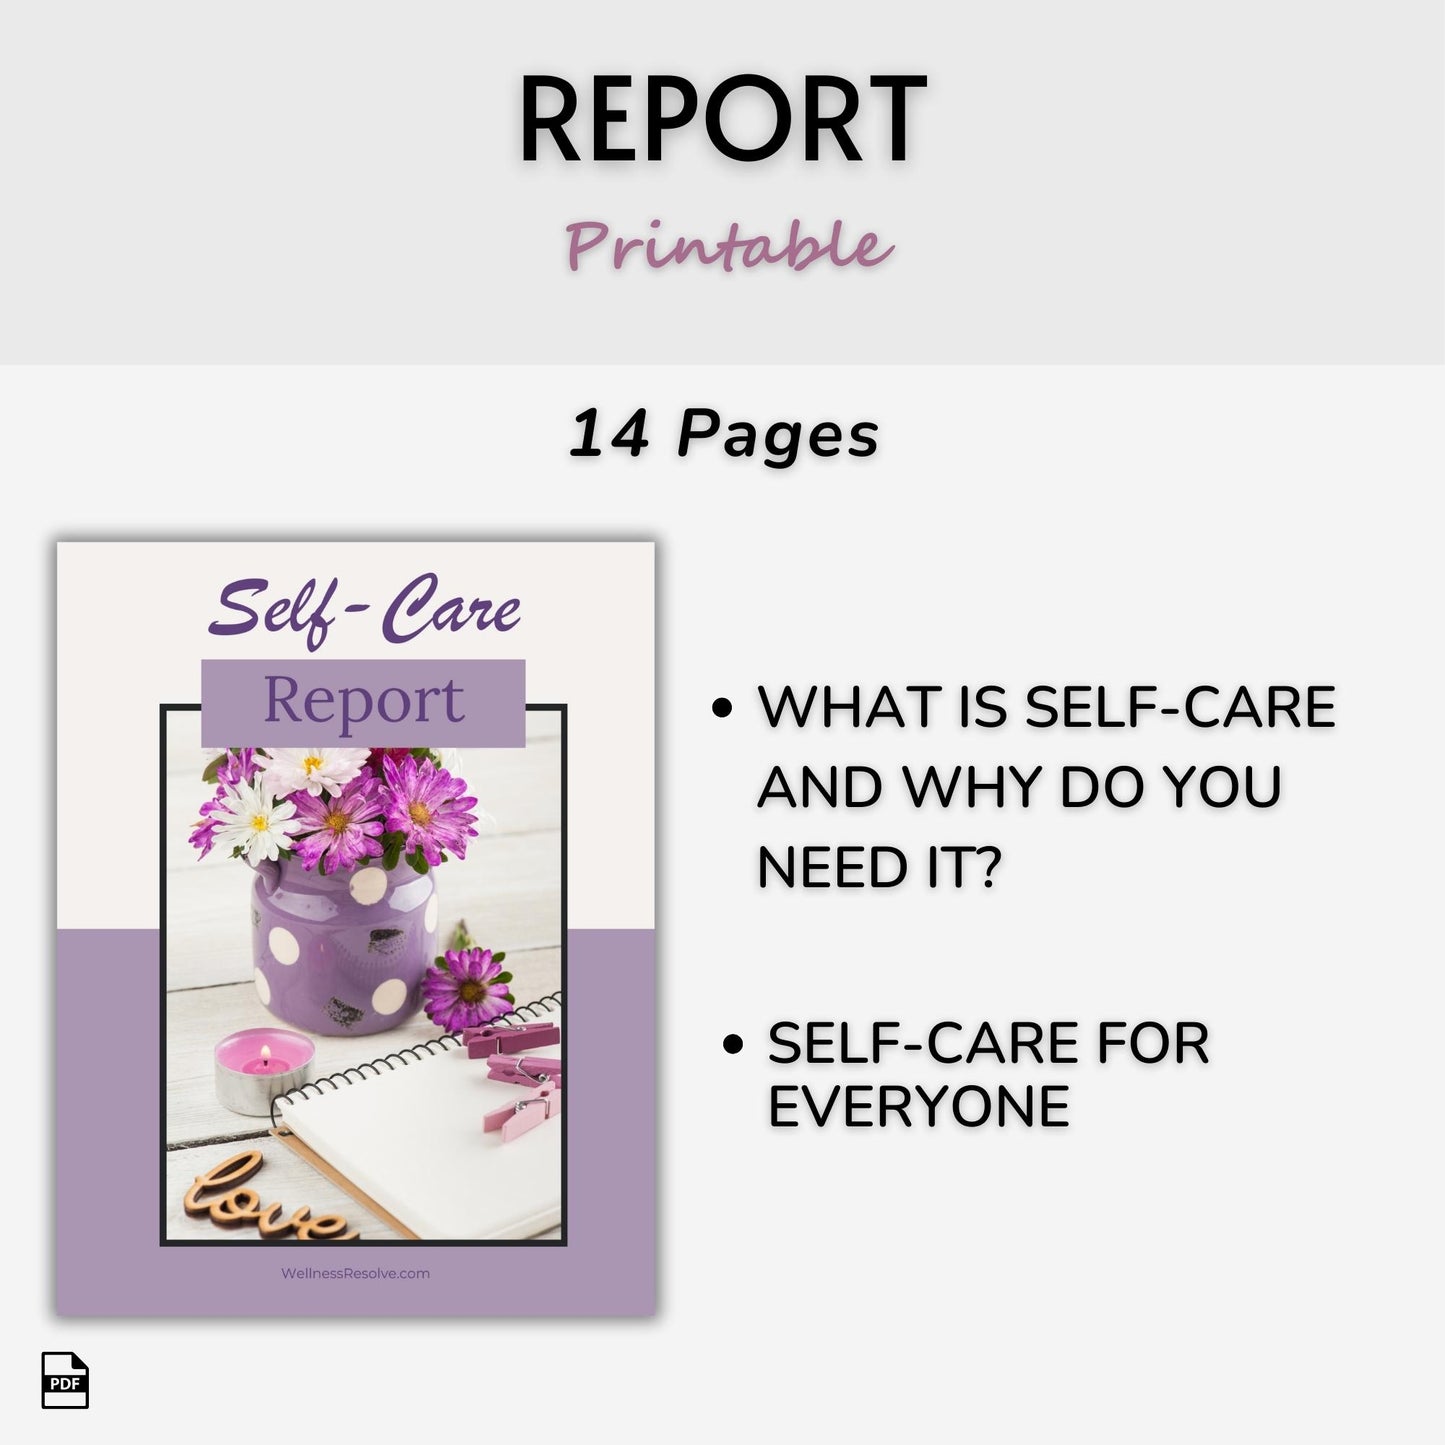 Self-Care Report and Workbook